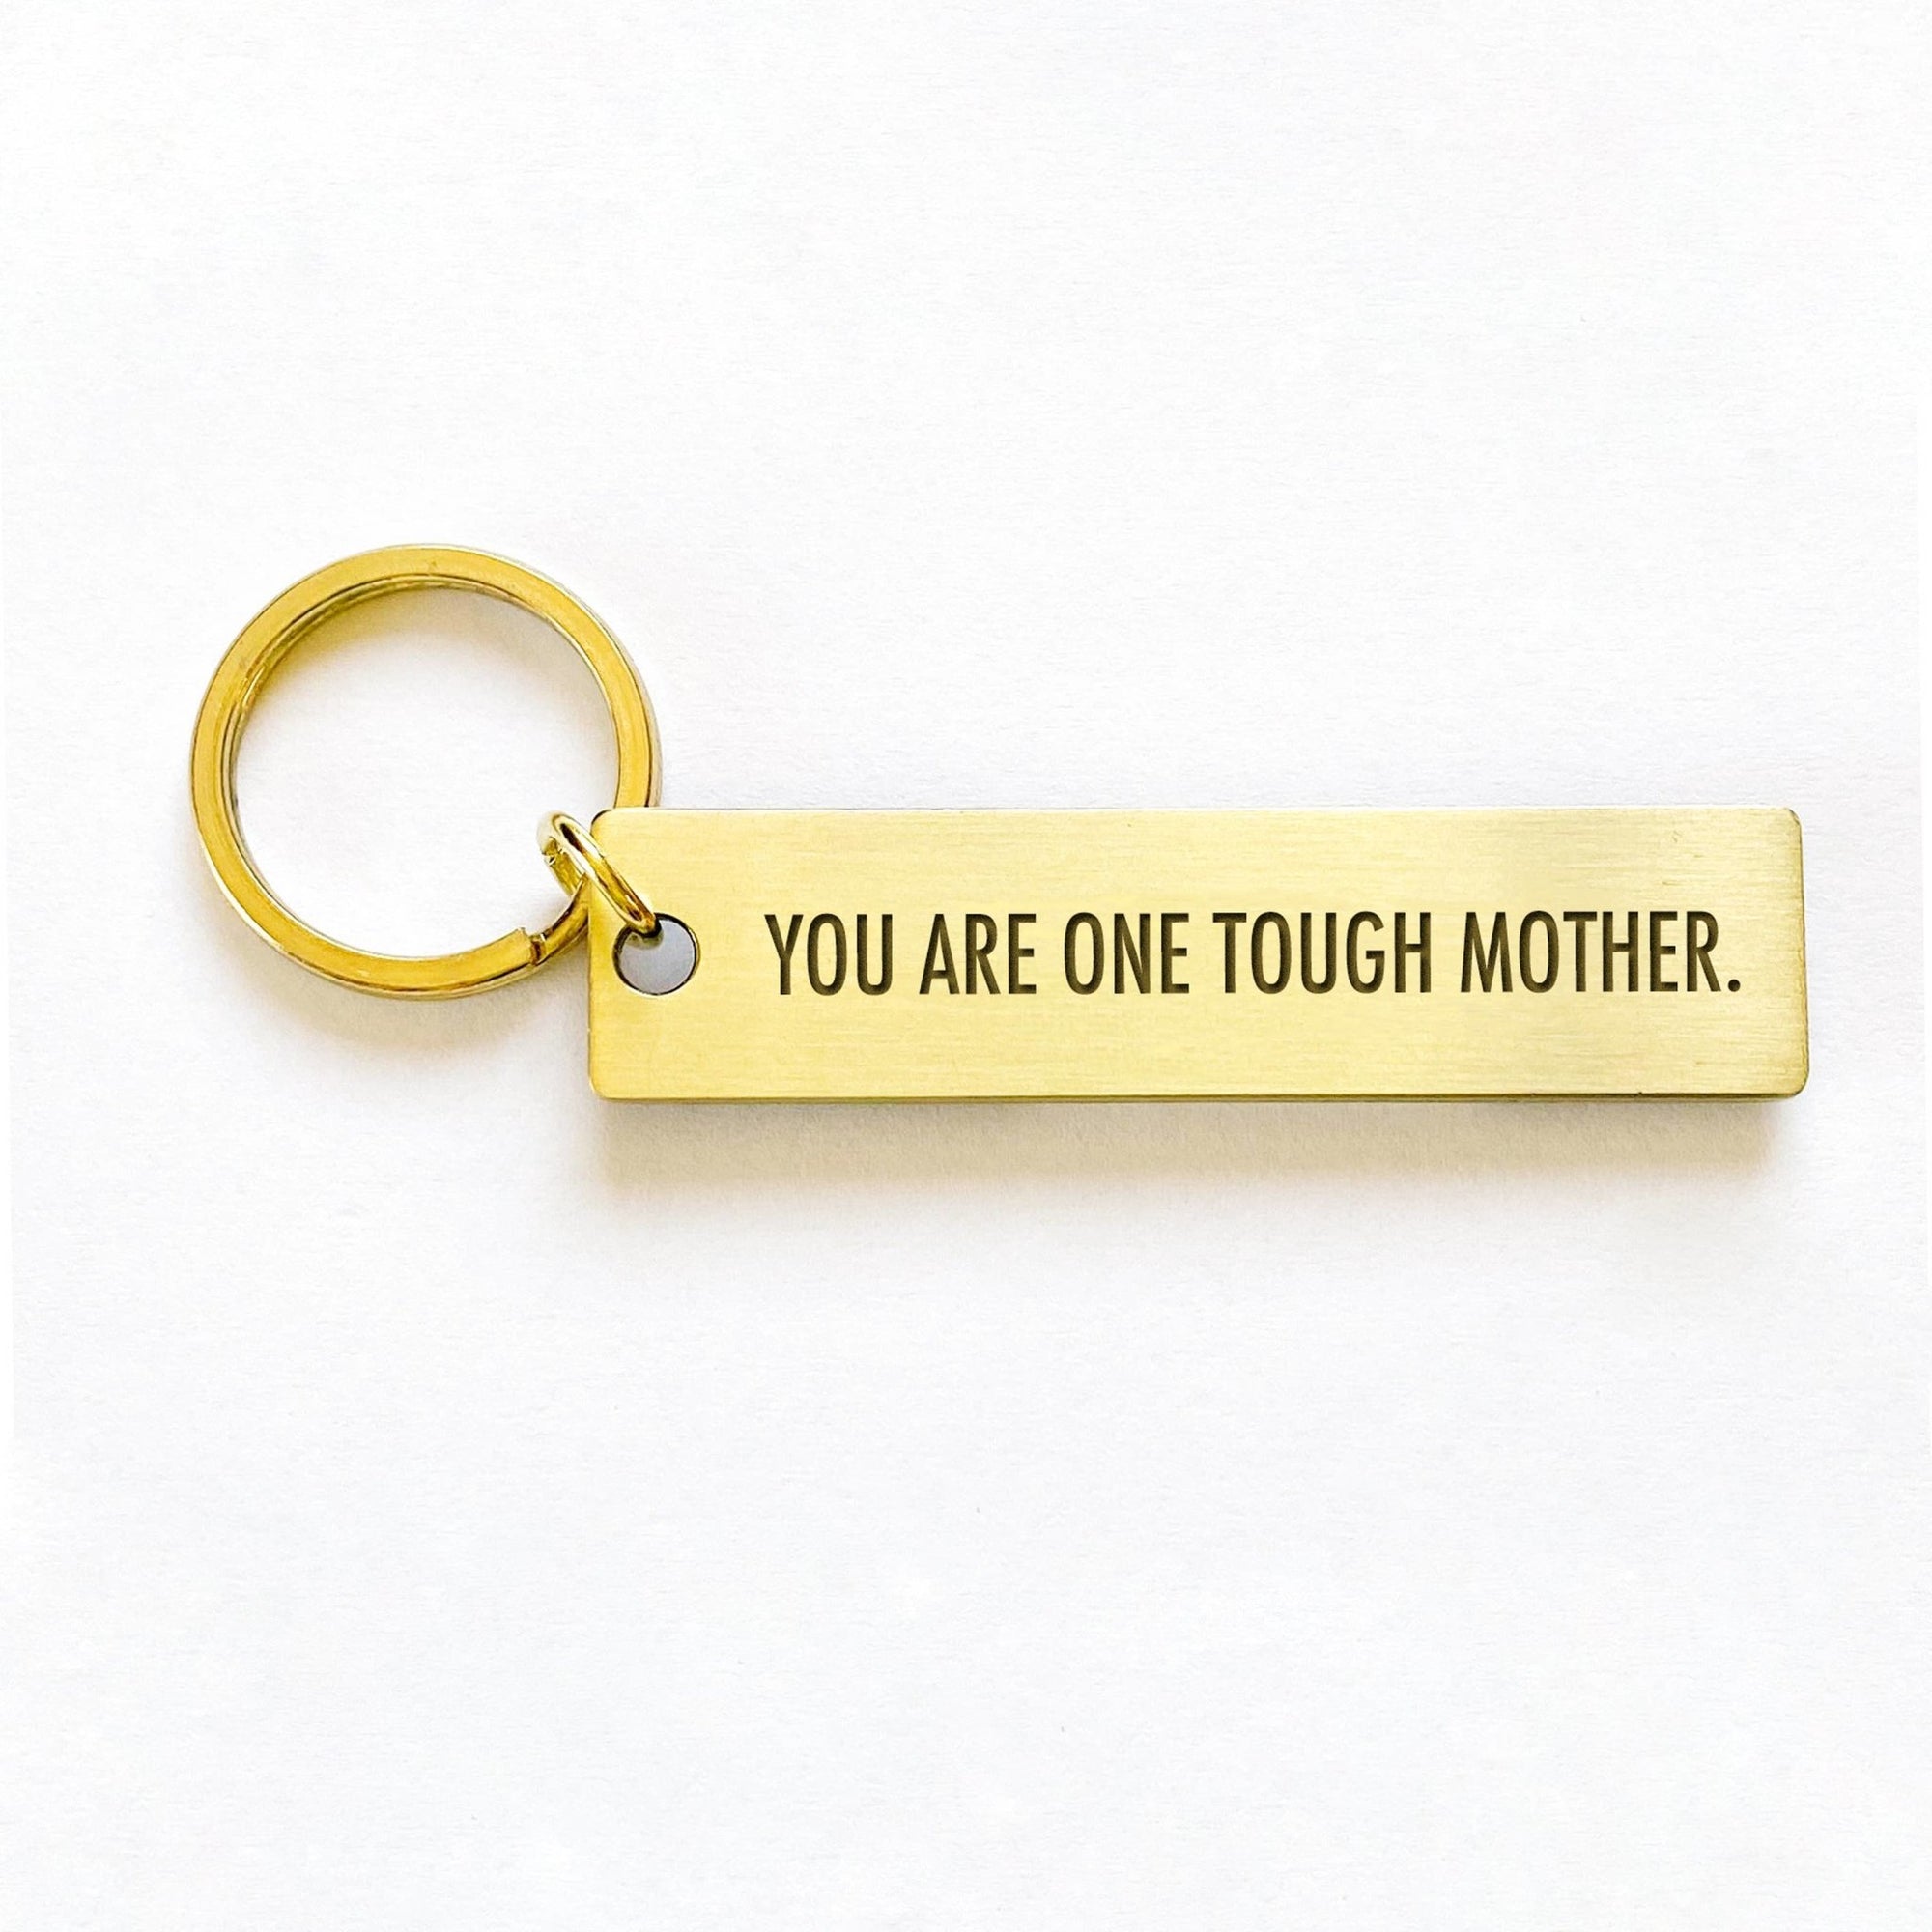 Tough Mother Key Chain - Abigail Fox Designs